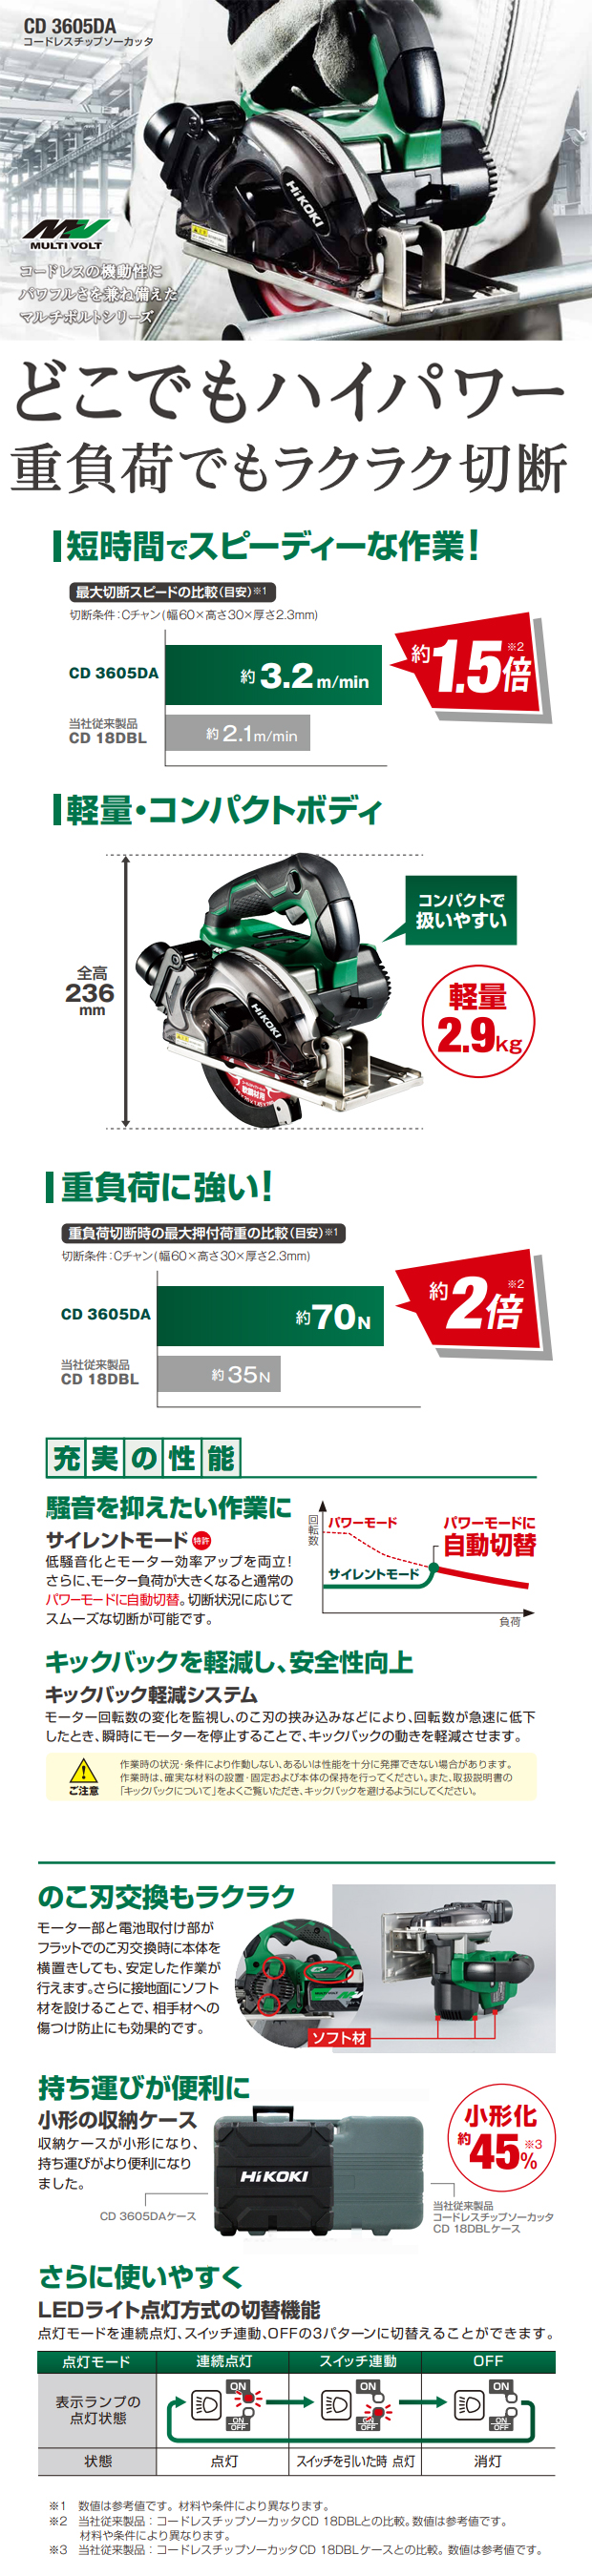 HiKOKI マルチボルト コードレスチップソーカッタ CD3605DA